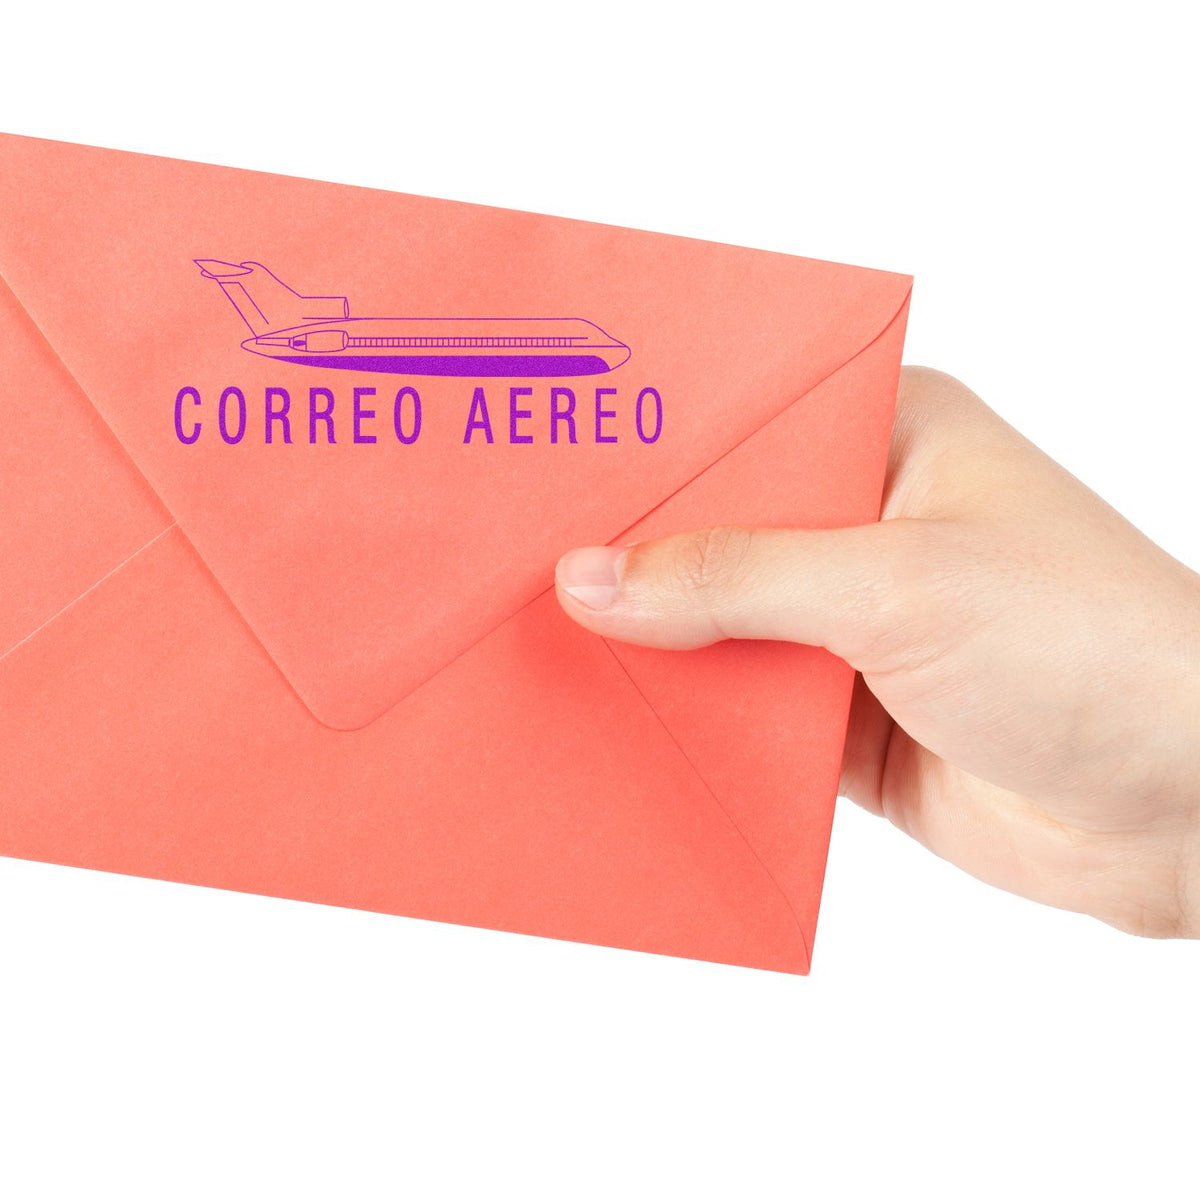 Self-Inking Correo Aero Stamp In Use